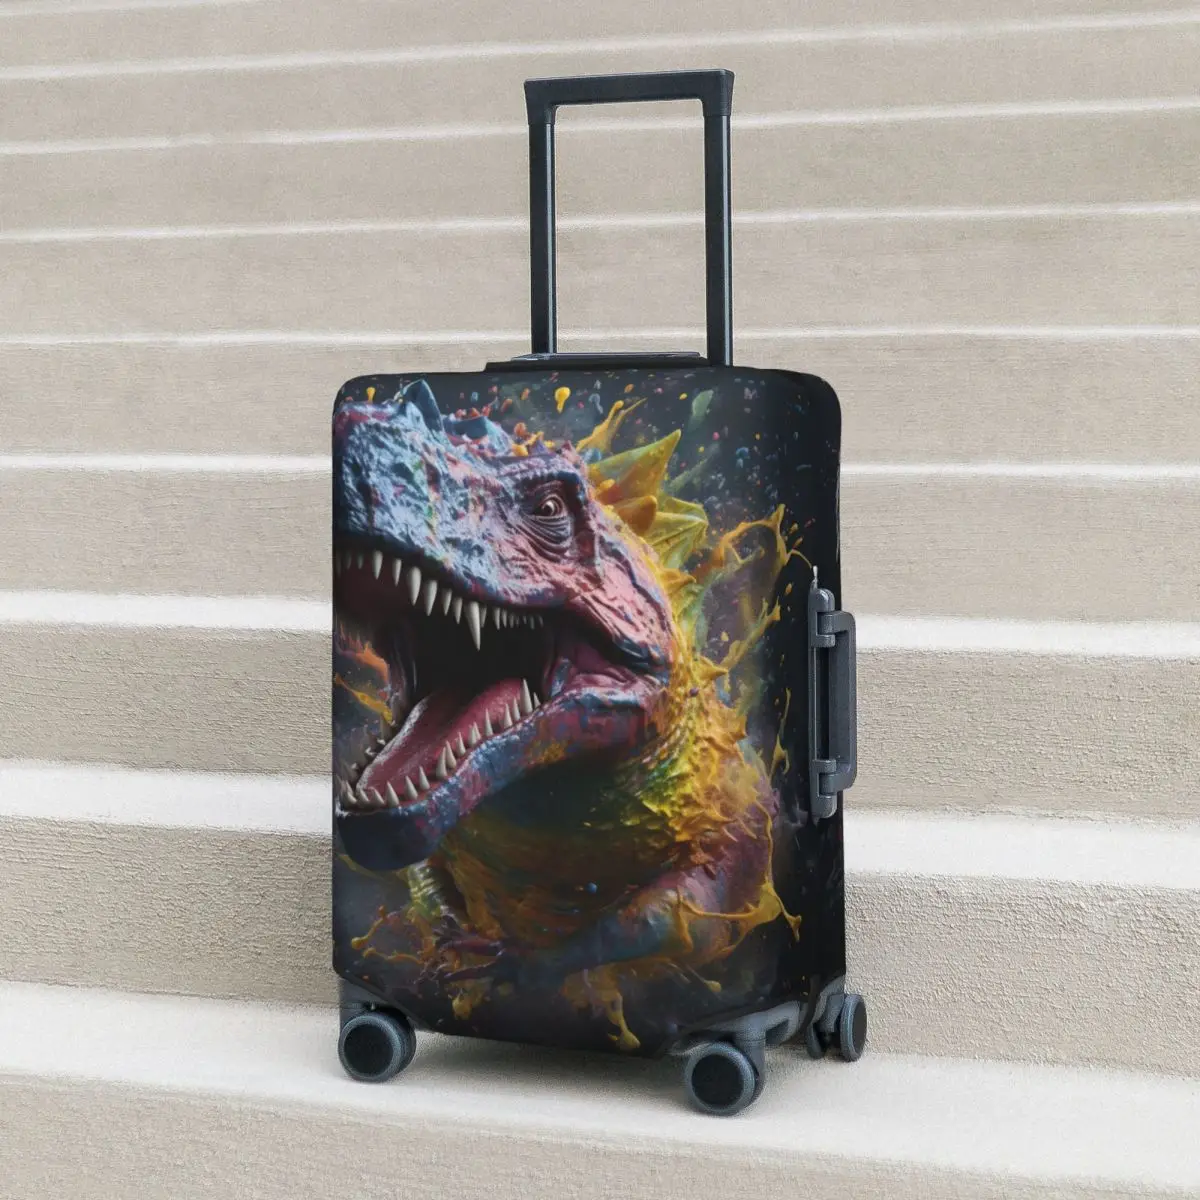 

Dinosaur Suitcase Cover Explosion Liquid Splash Travel Protection Holiday Fun Luggage Case